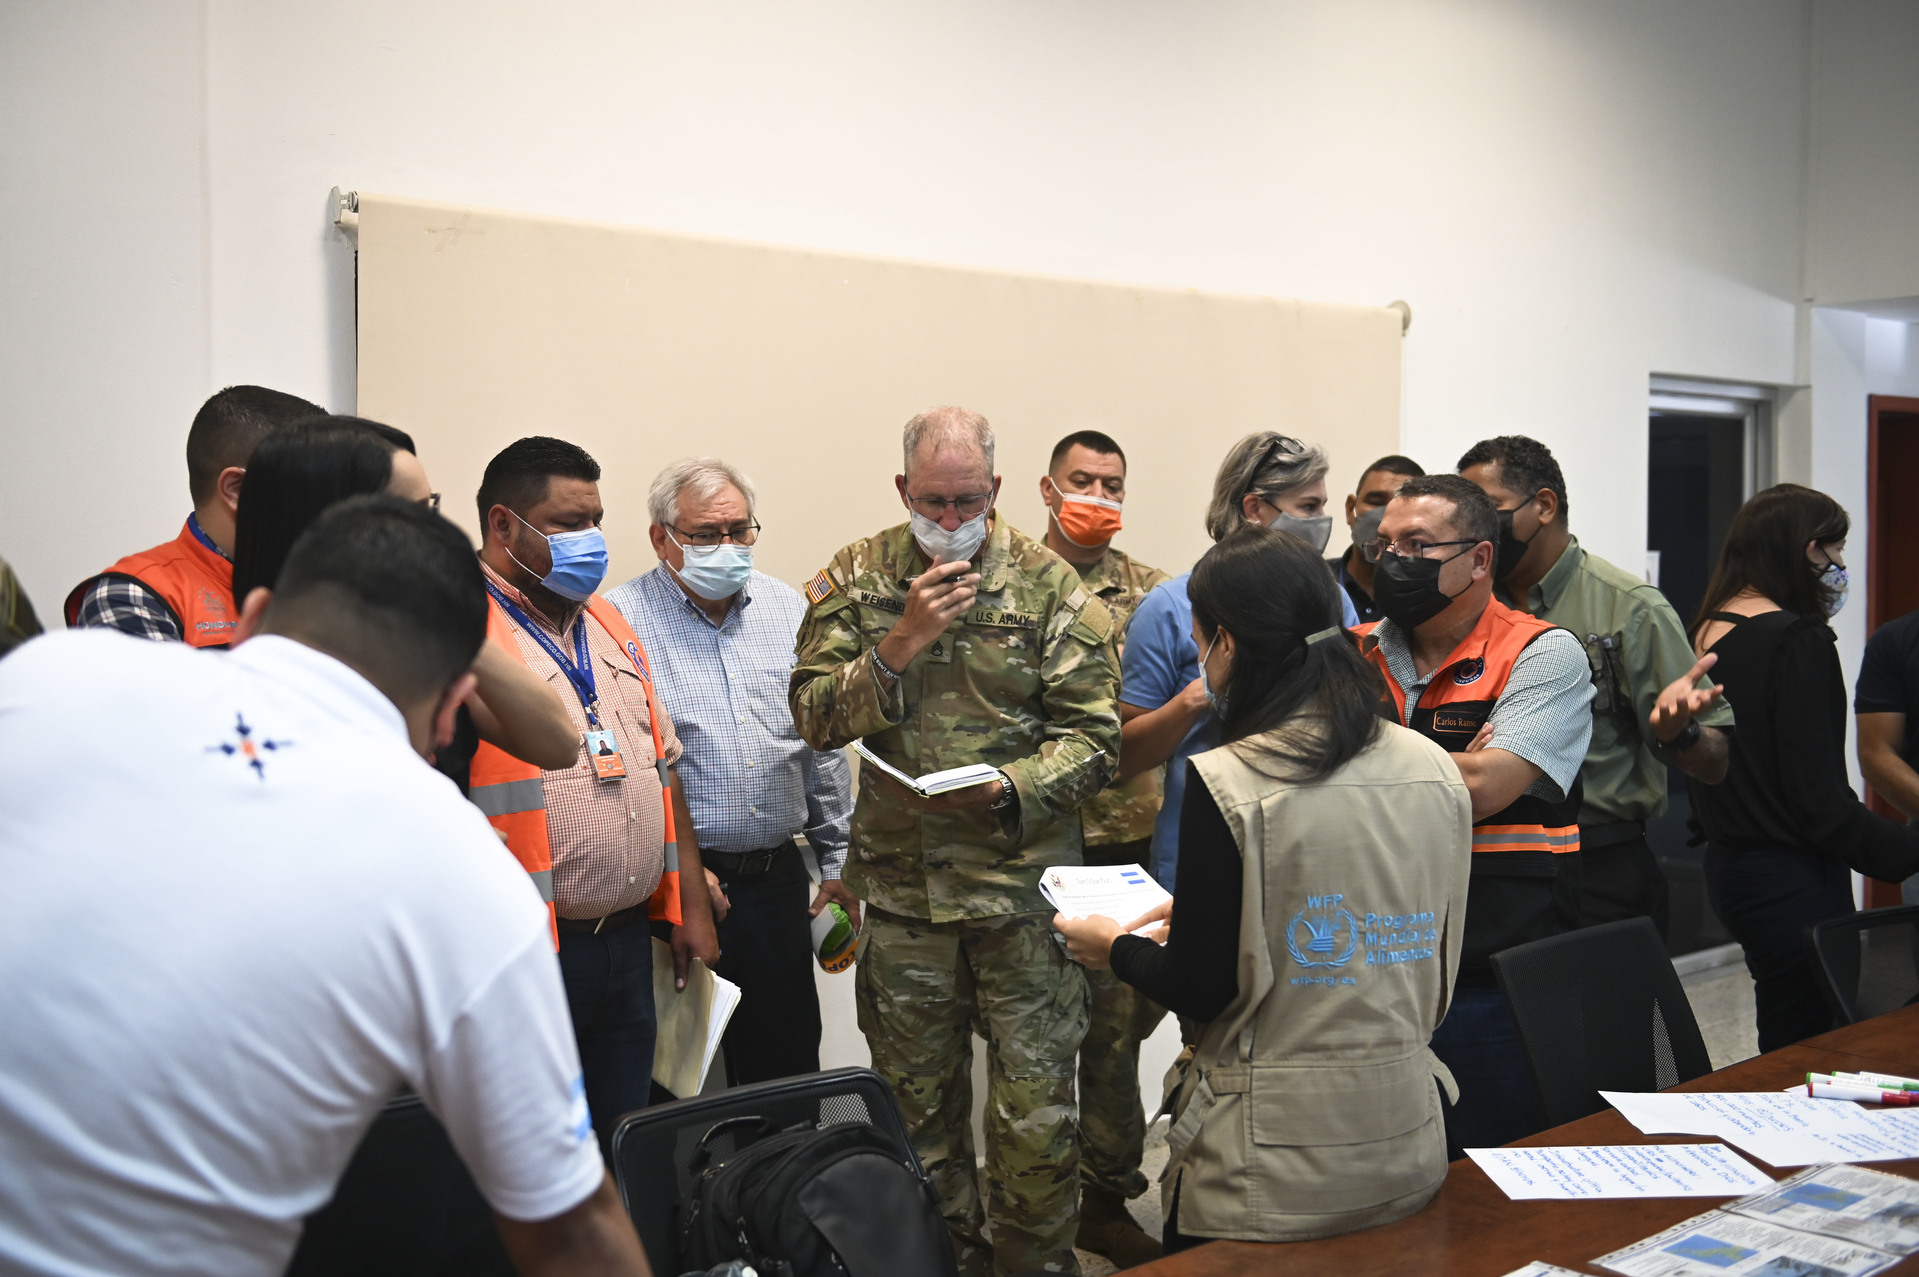 JTF-Bravo, Honduras, Buidling Trust and Disaster Preparedness